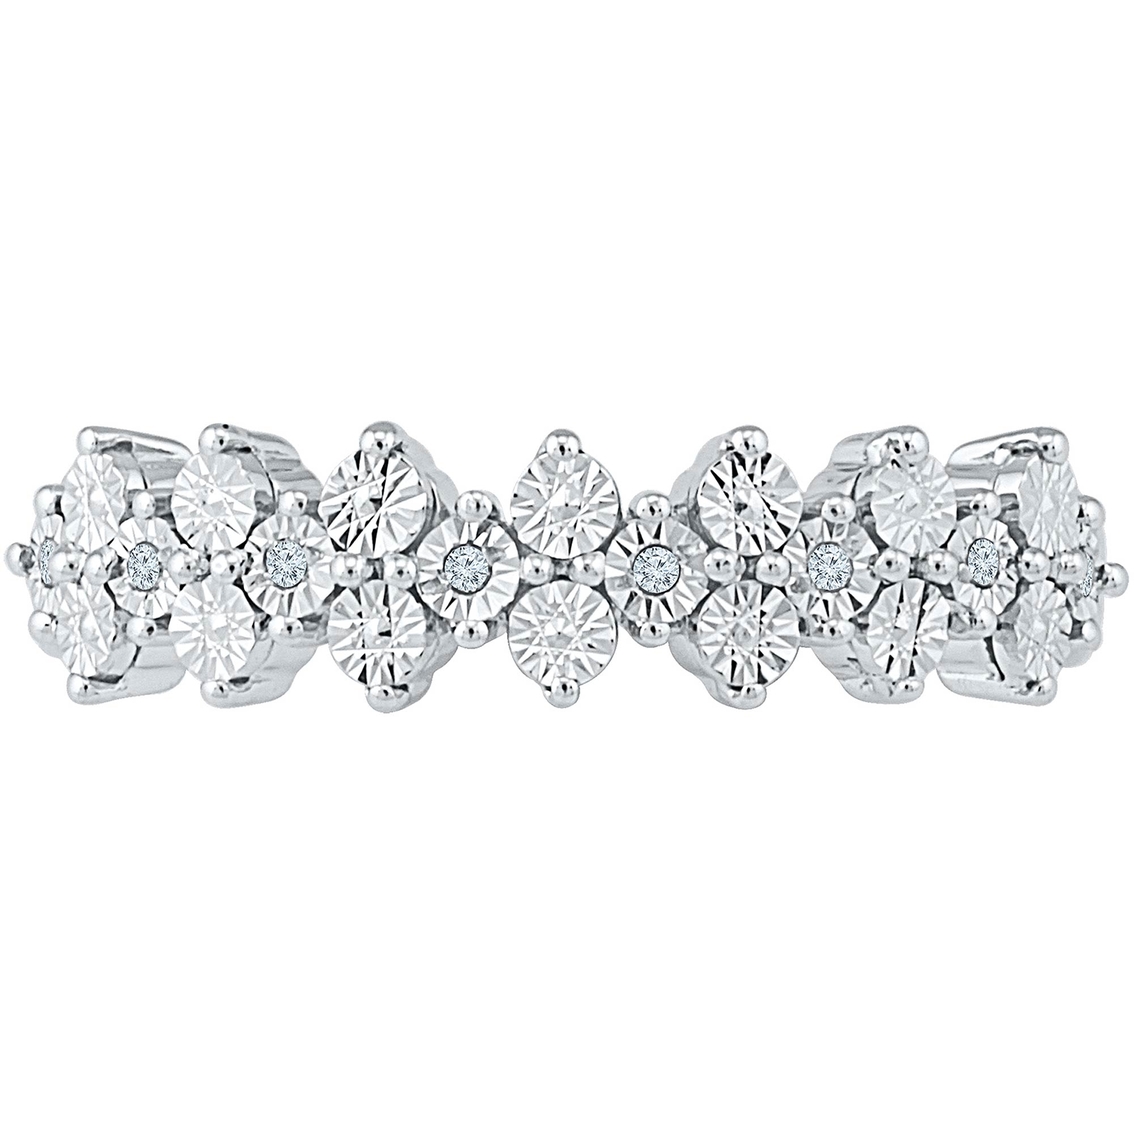 10K White Gold Diamond Accent Fashion Ring - Image 2 of 2